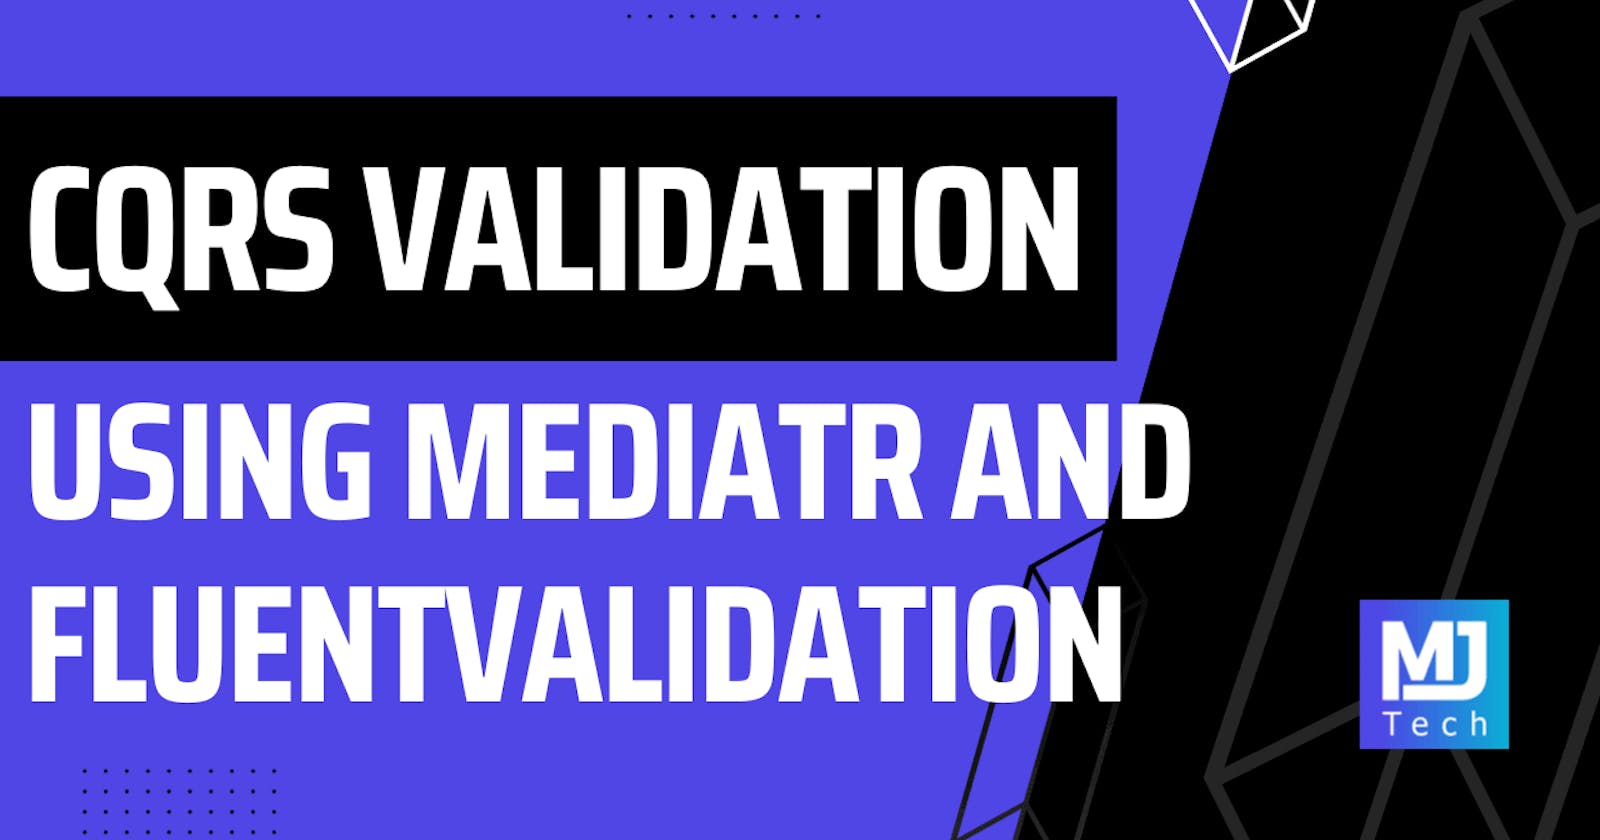 CQRS Validation with MediatR Pipeline and FluentValidation